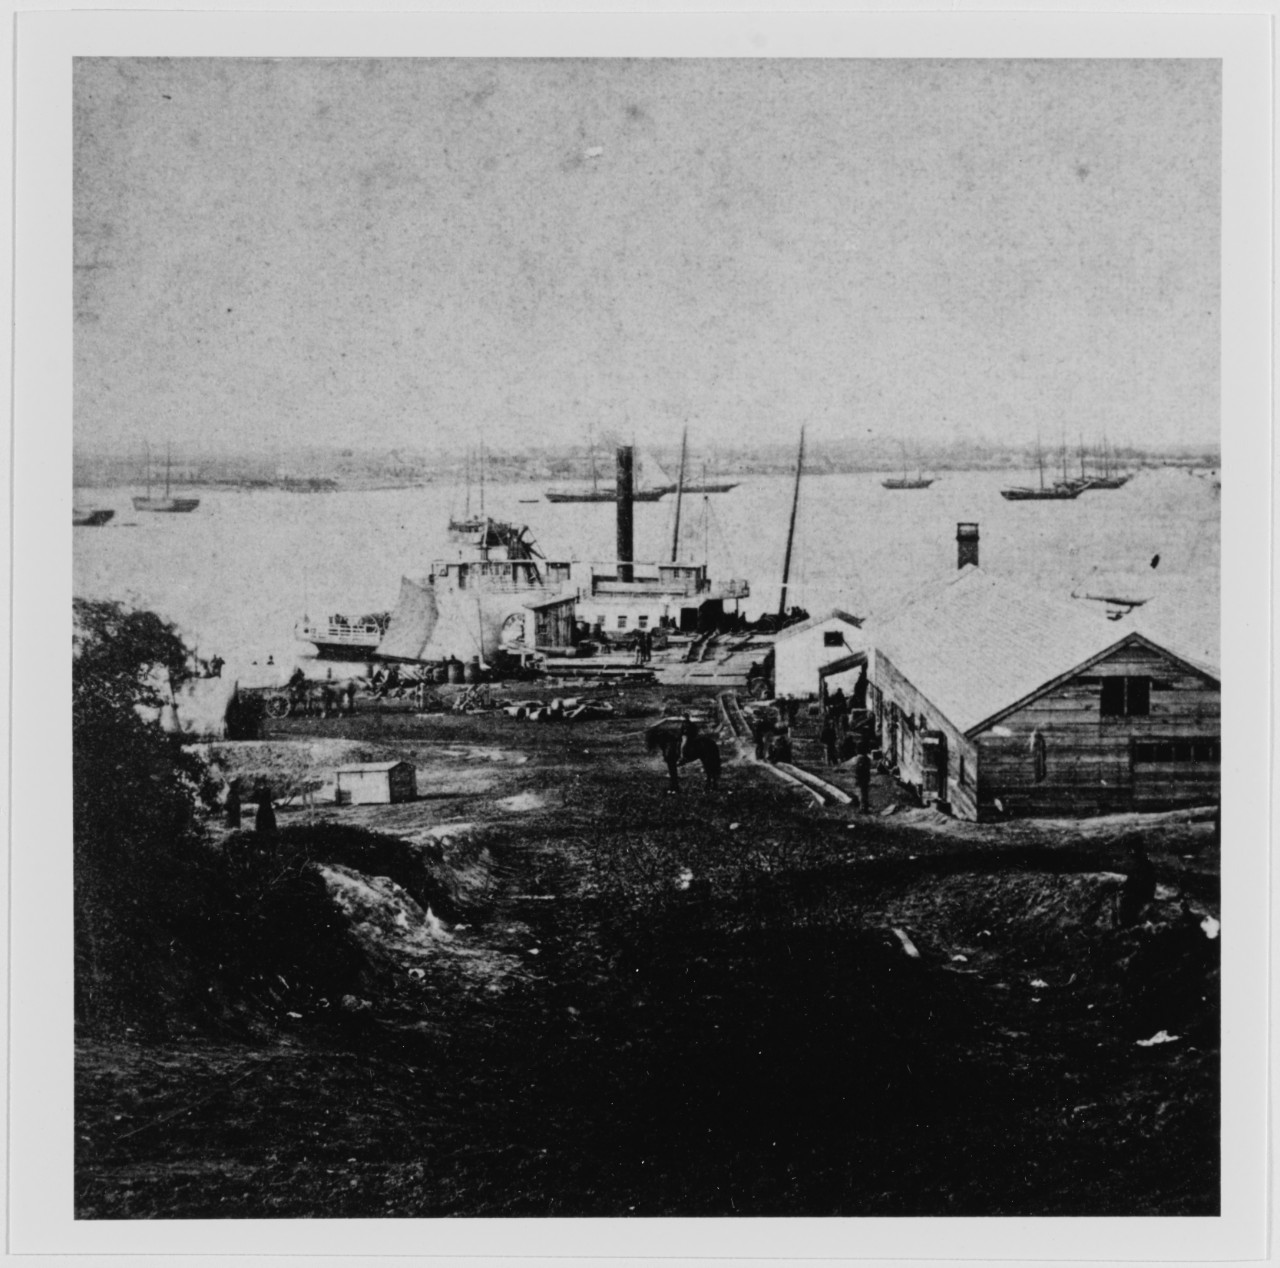 Yorktown Landing, opposite Gloucester, Virginia photographed during the Civil War